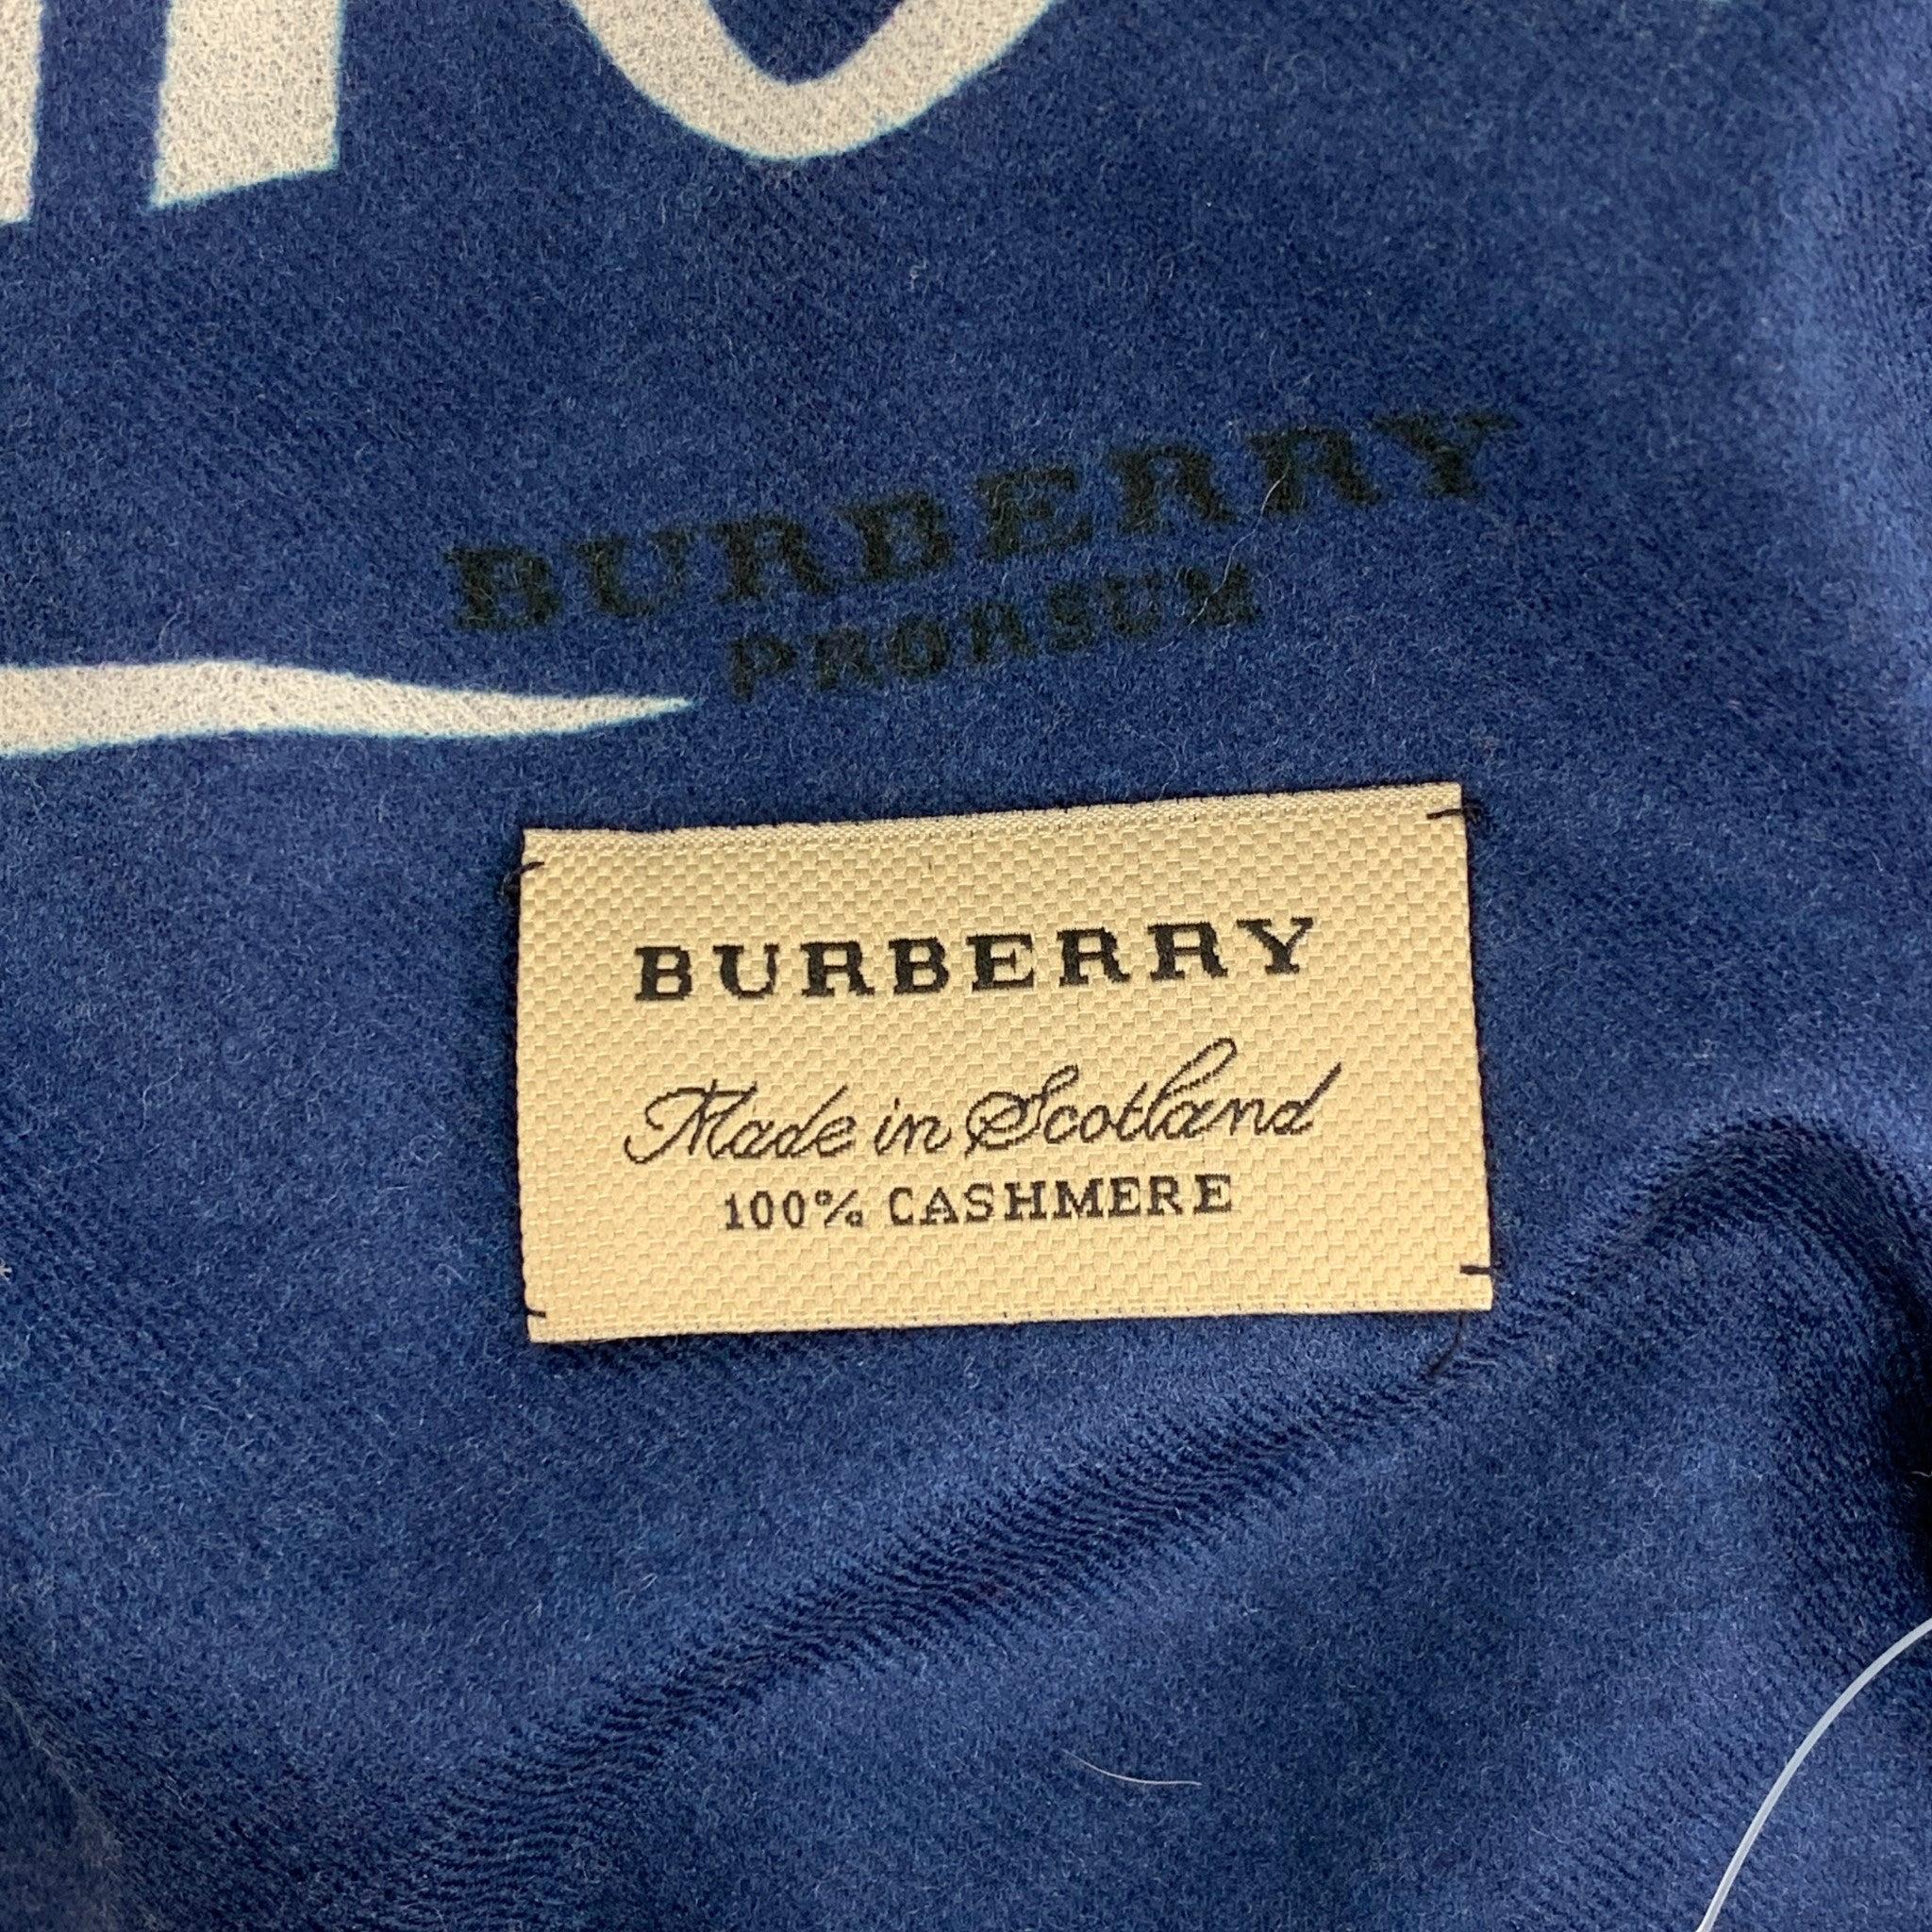 Men's BURBERRY PRORSUM Spring 2015 Size One Size Blue & White Script Cashmere Scarf